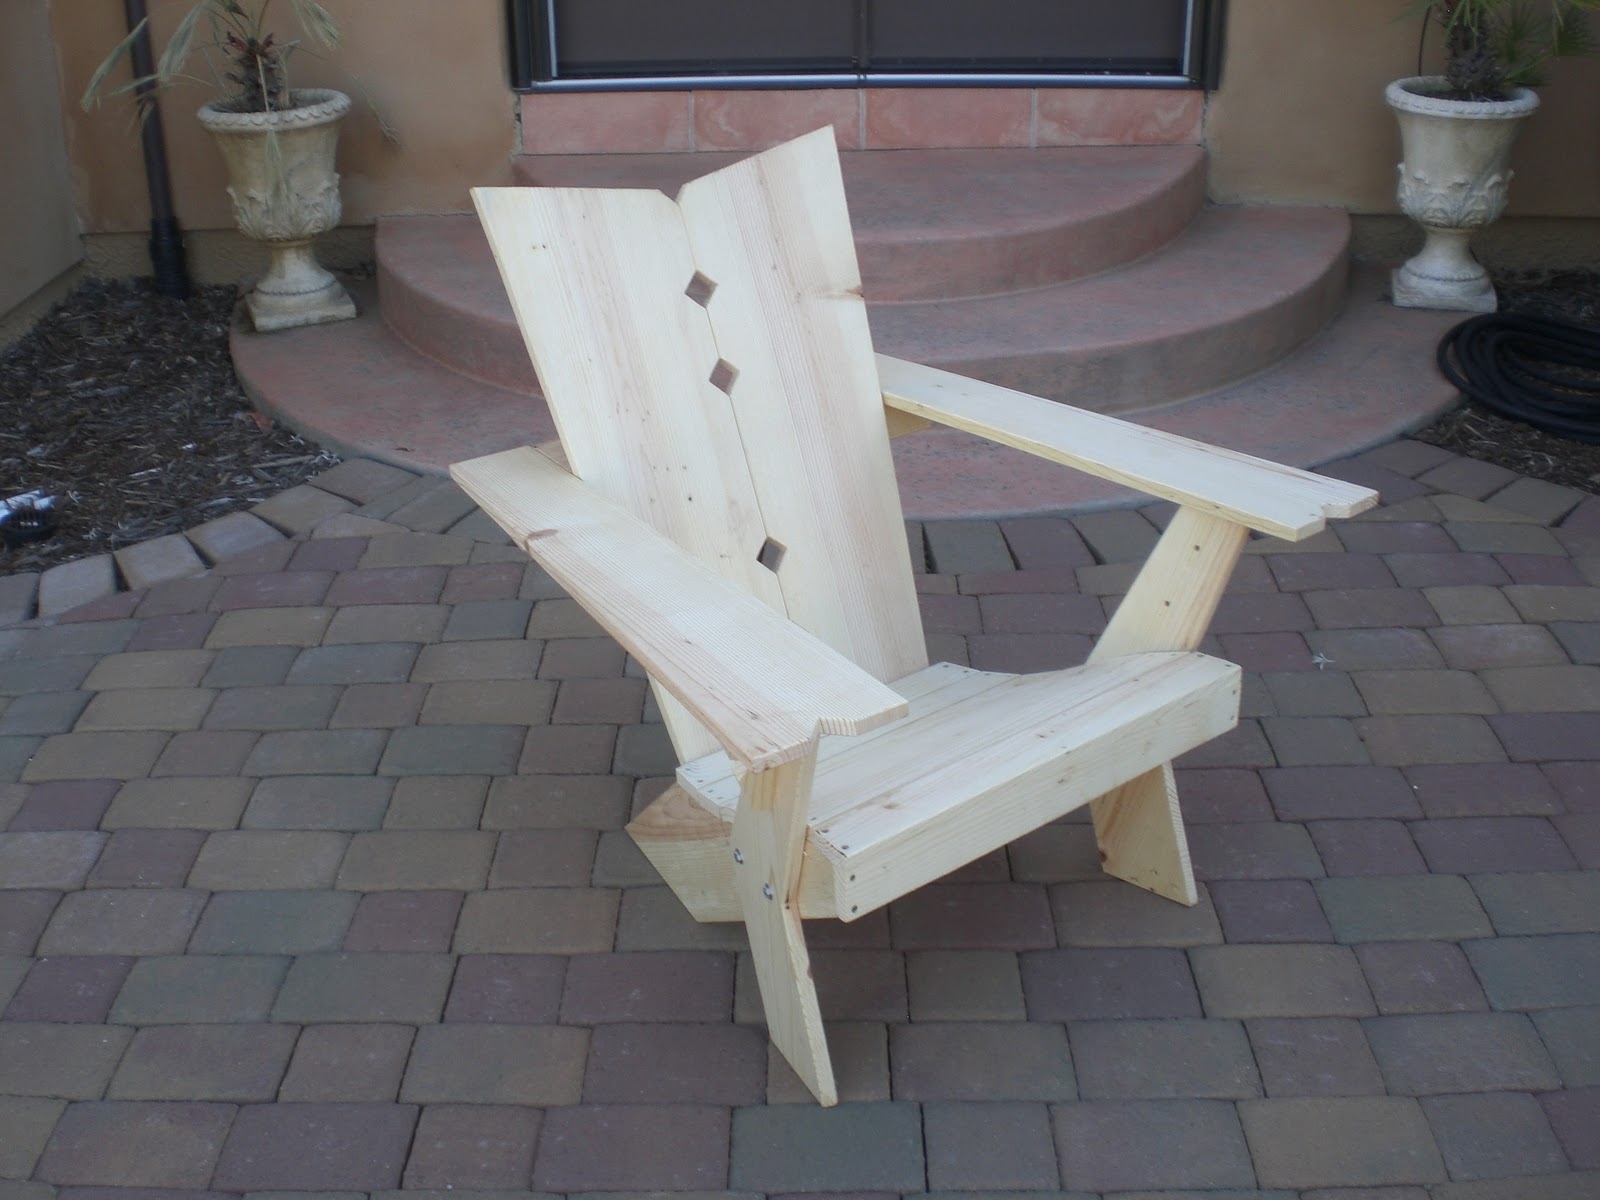 Fish Adirondack Chair Plans PDF Woodworking